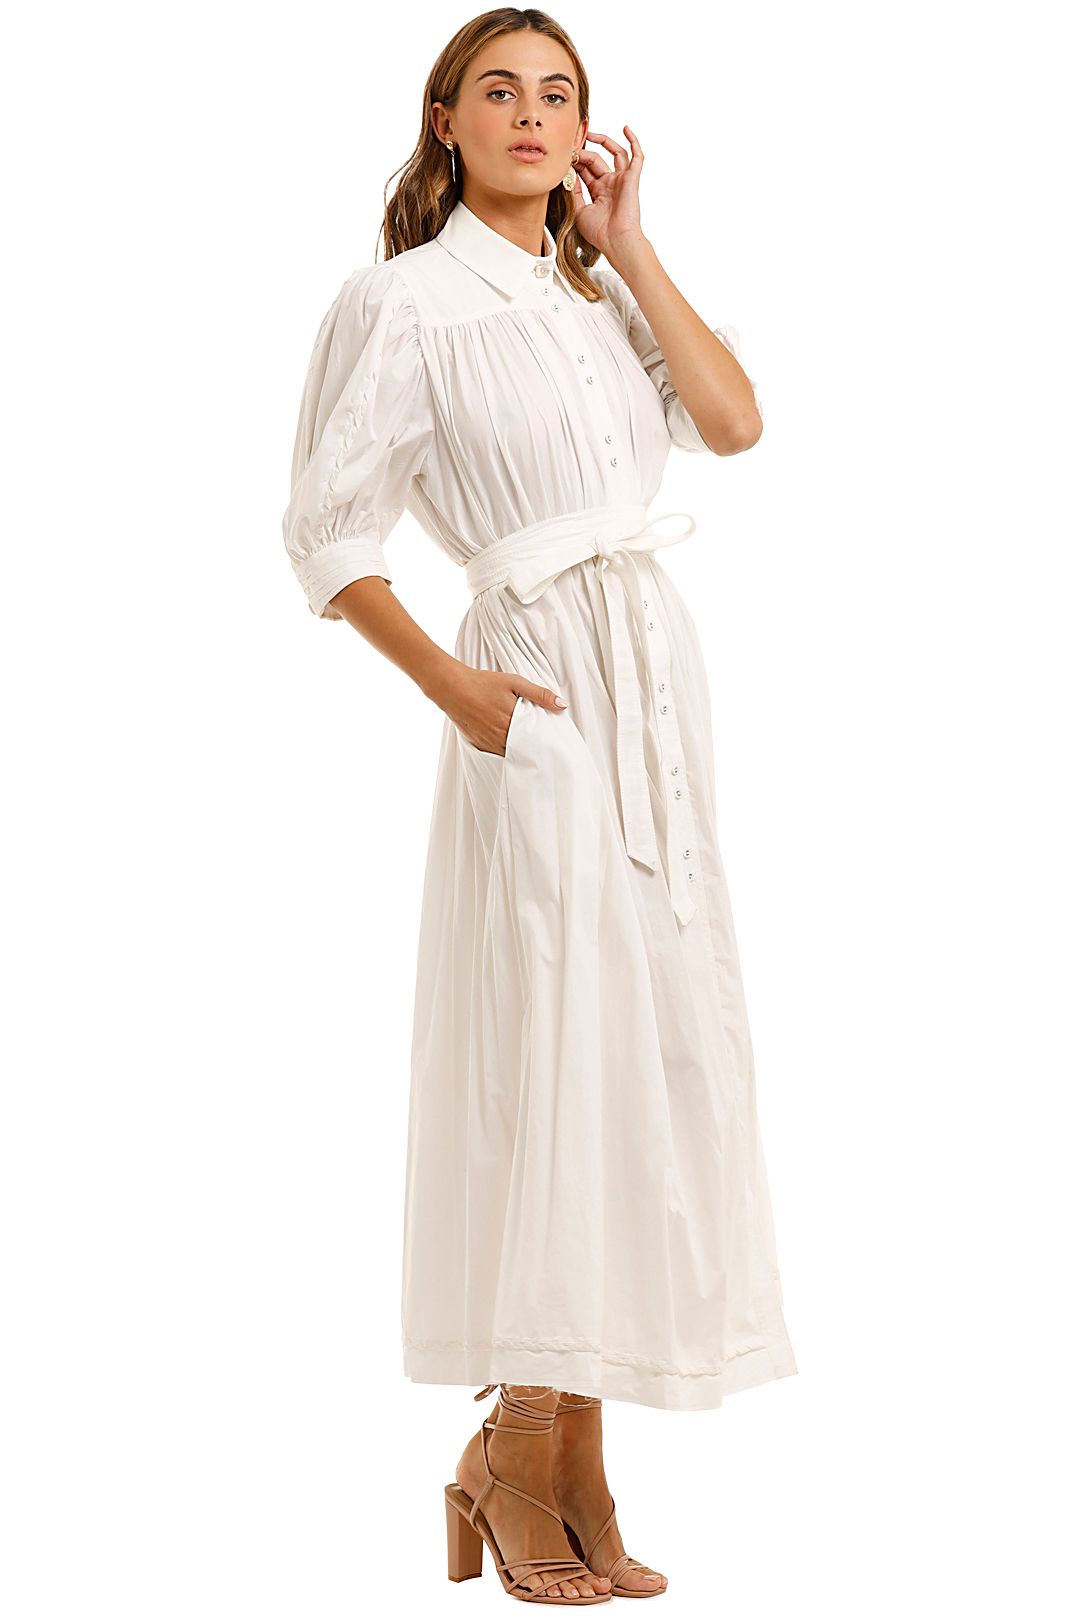 AJE Organic Manifest Dress white belted